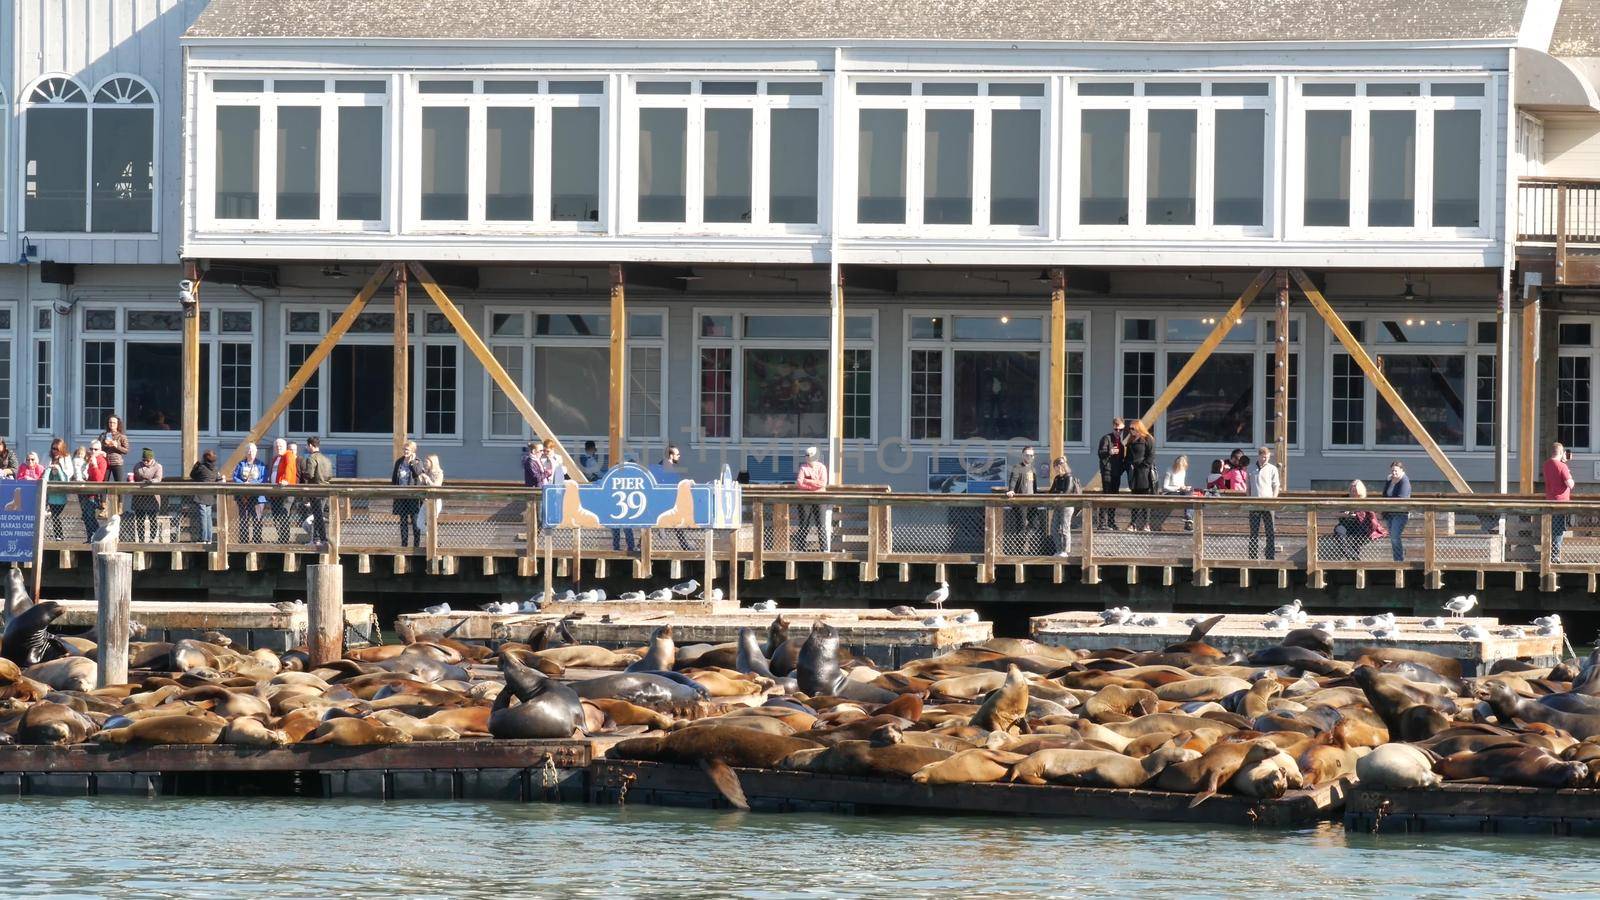 SAN FRANCISCO, CALIFORNIA, USA - 25 NOV 2019: Many seals on pier 39, tourist landmark. People near sea lion rookery in natural habitat . Colony of wild marine mammals at harbor dock, herd at wharf.